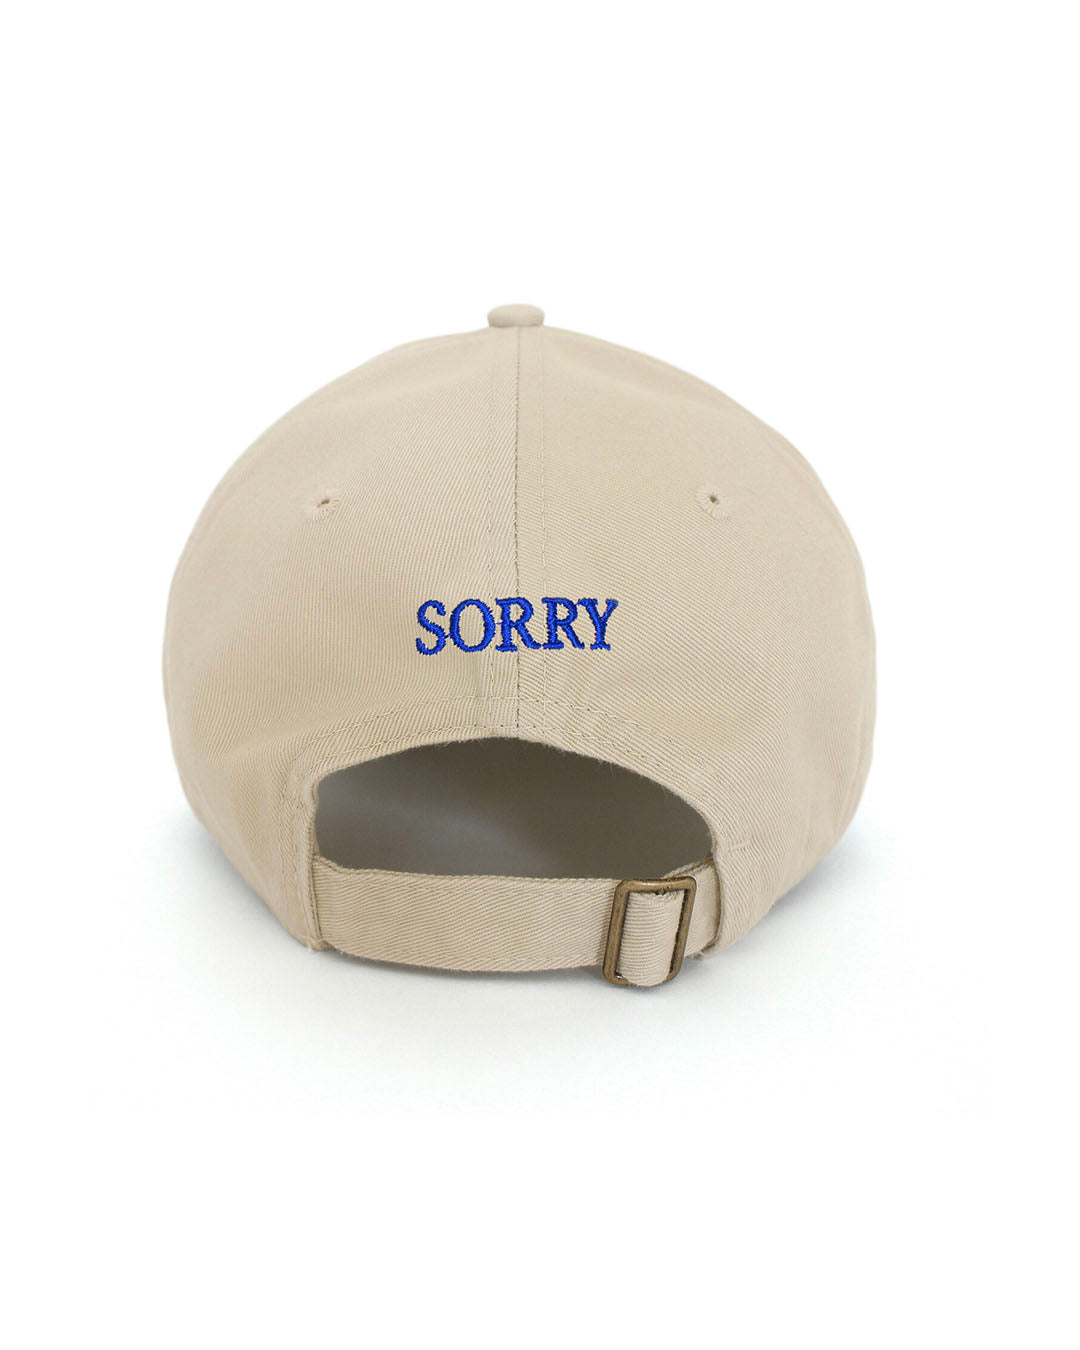 [IDEA] SORRY I DON'T WORK HERE CAP - BLUE